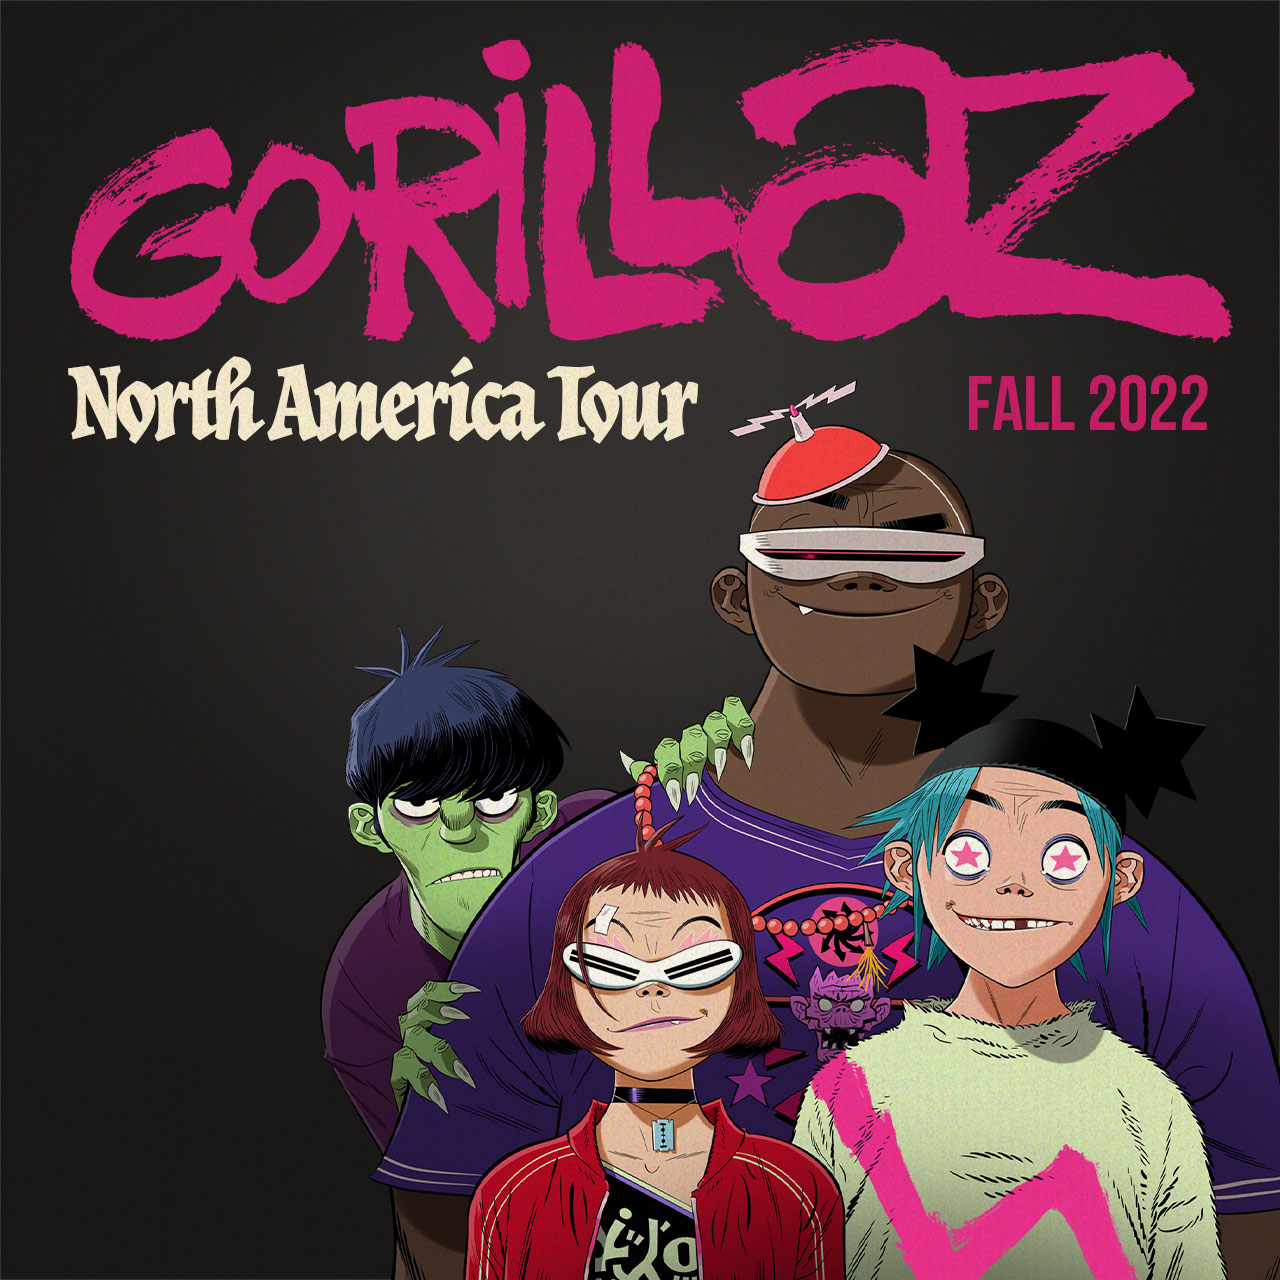 North America Tour Fall 2022